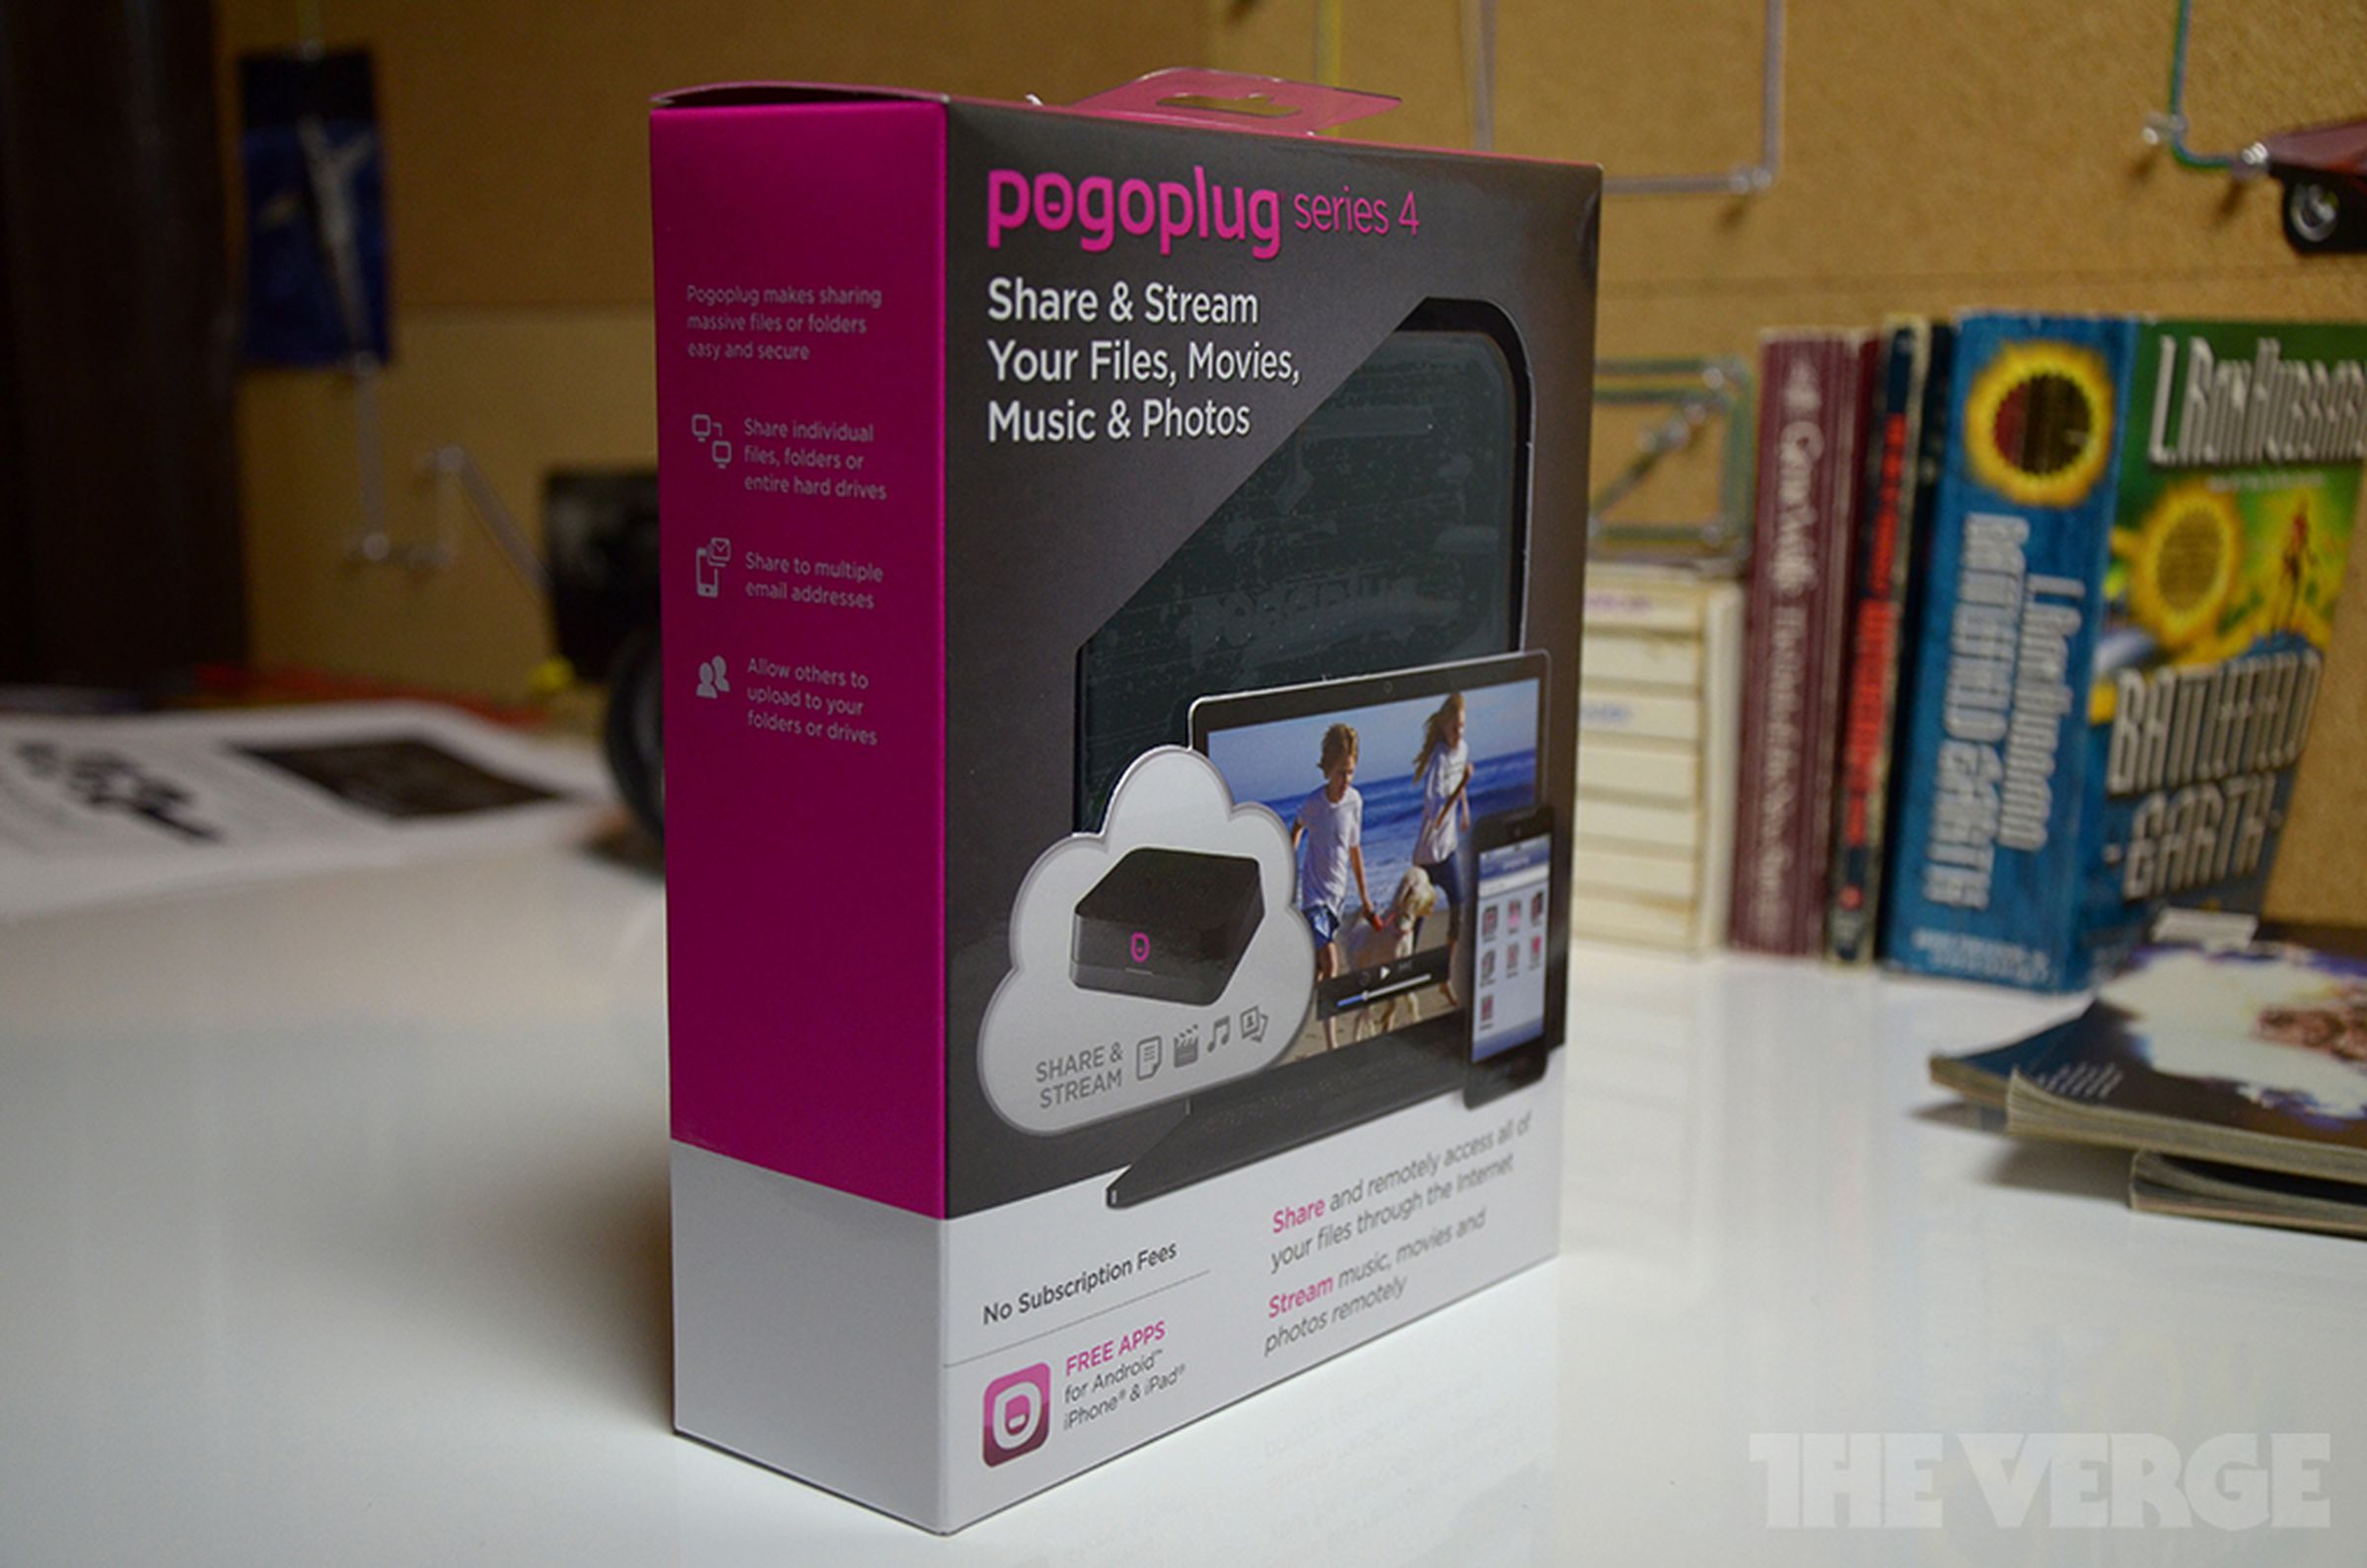 Pogoplug Series 4 hardware review photos